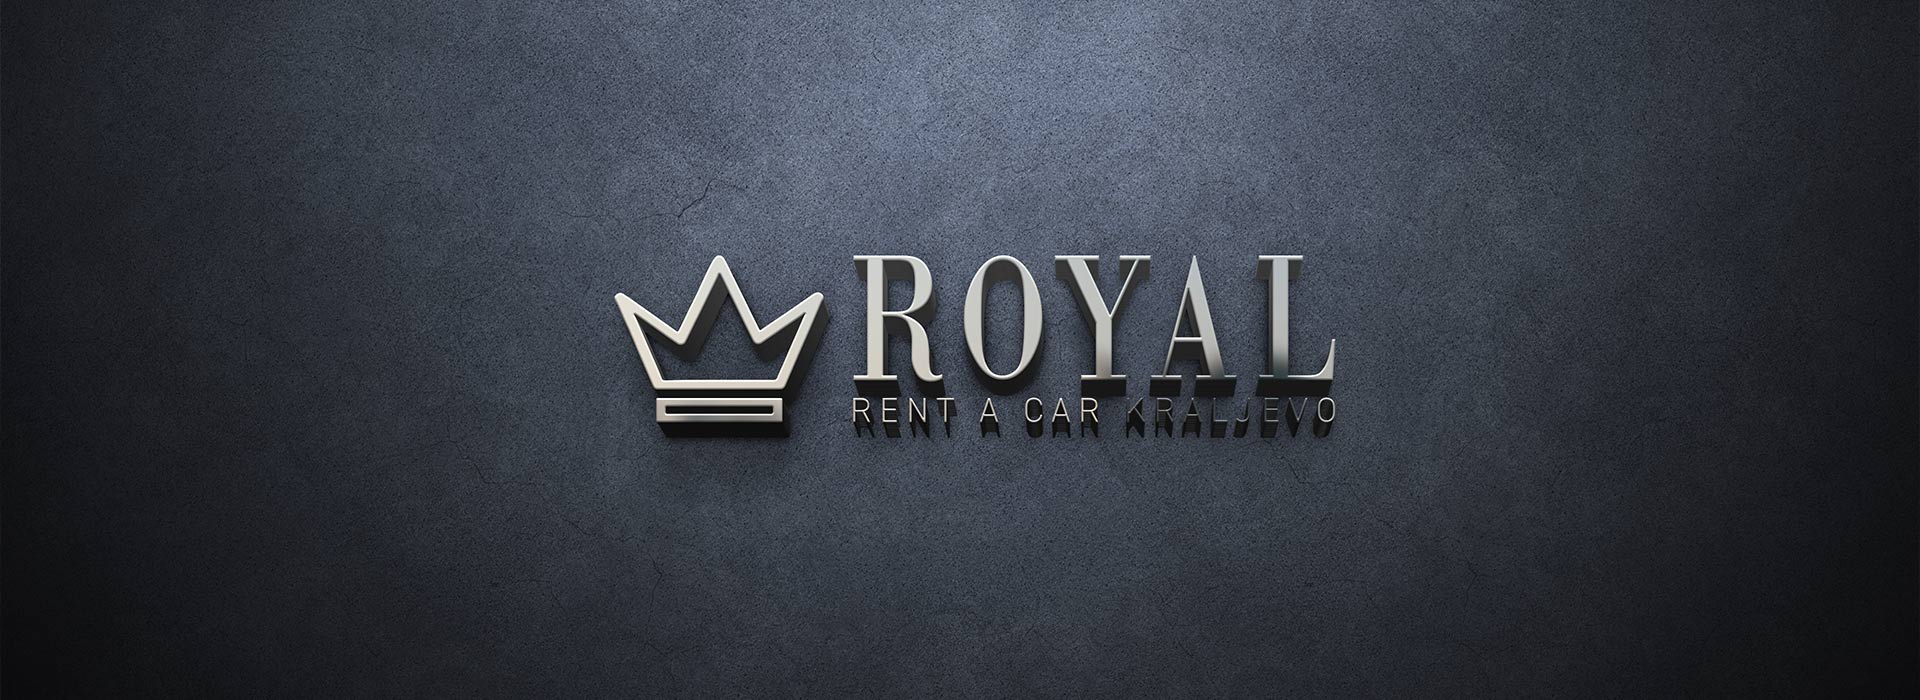 Rent a Car Kraljevo | About us